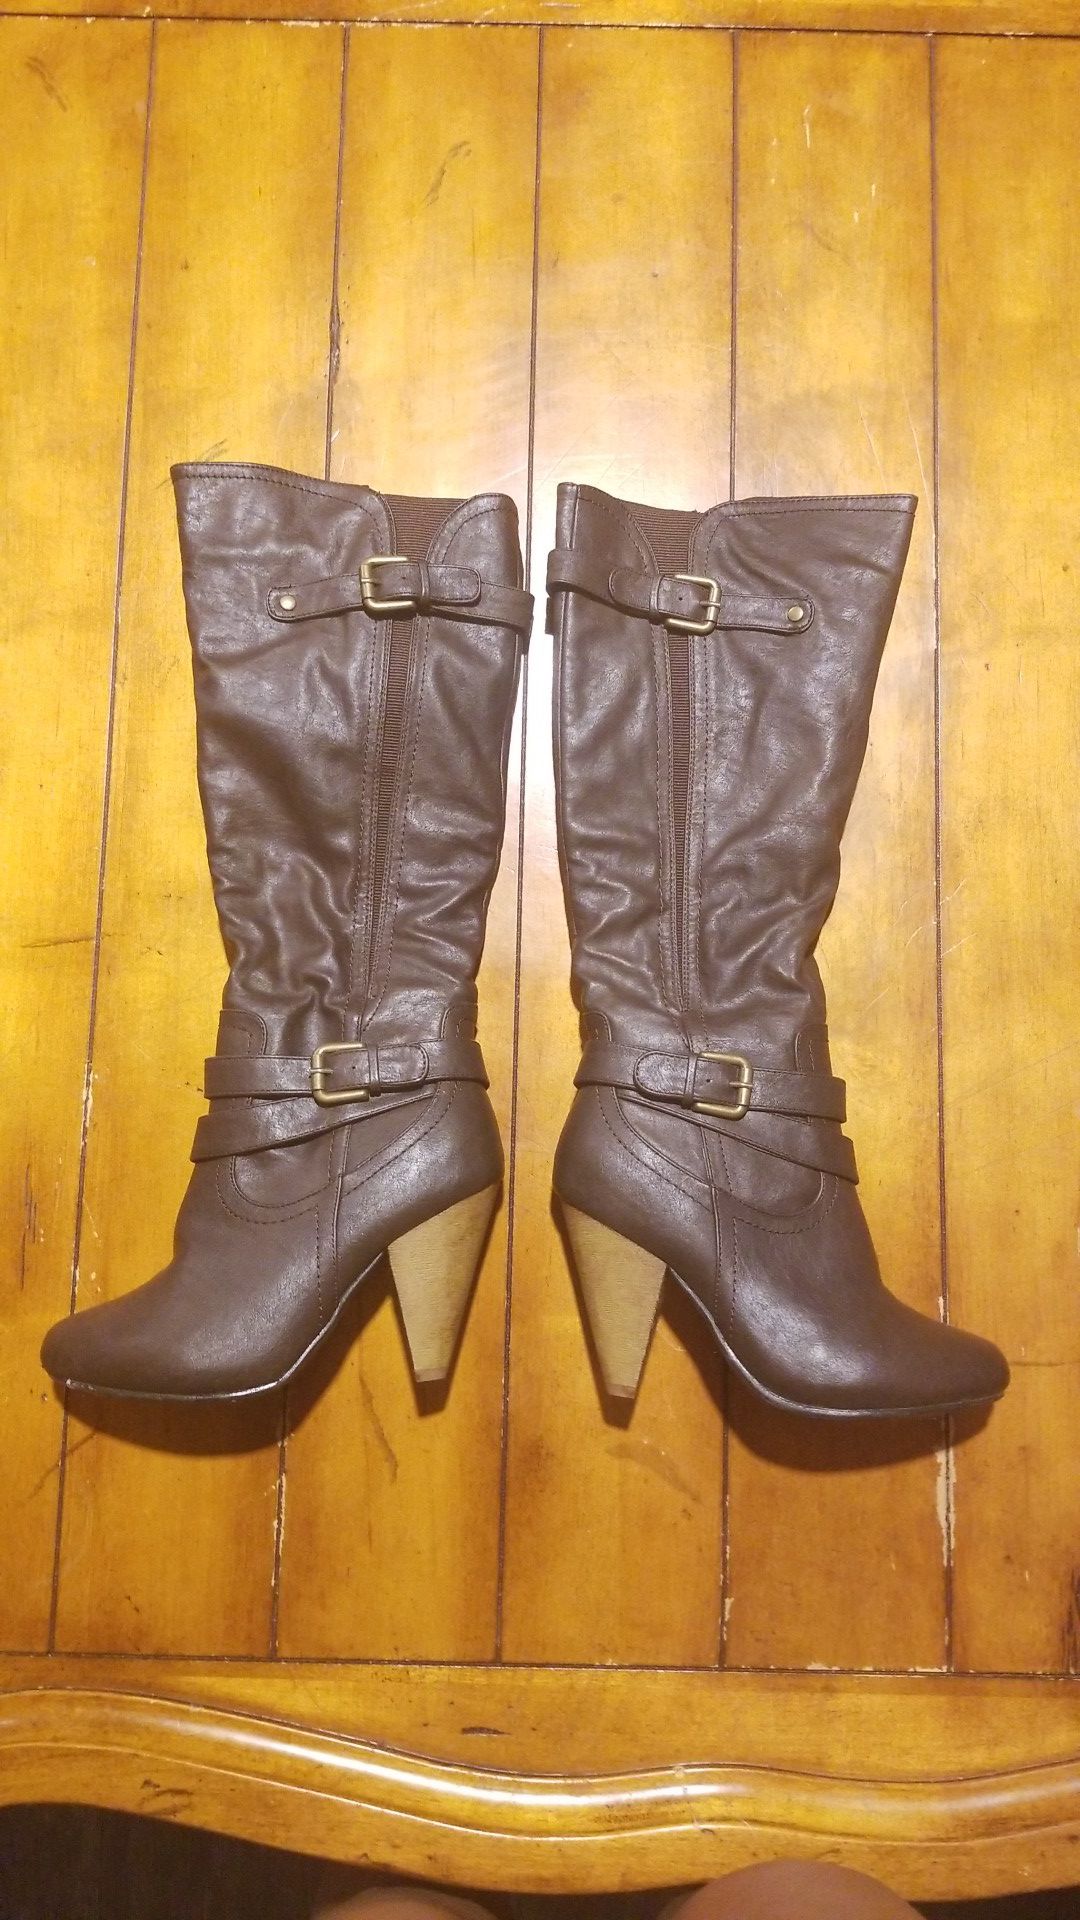 New size 5.5 women's knee high dark brown boots fashion fall winter heels by wild diva